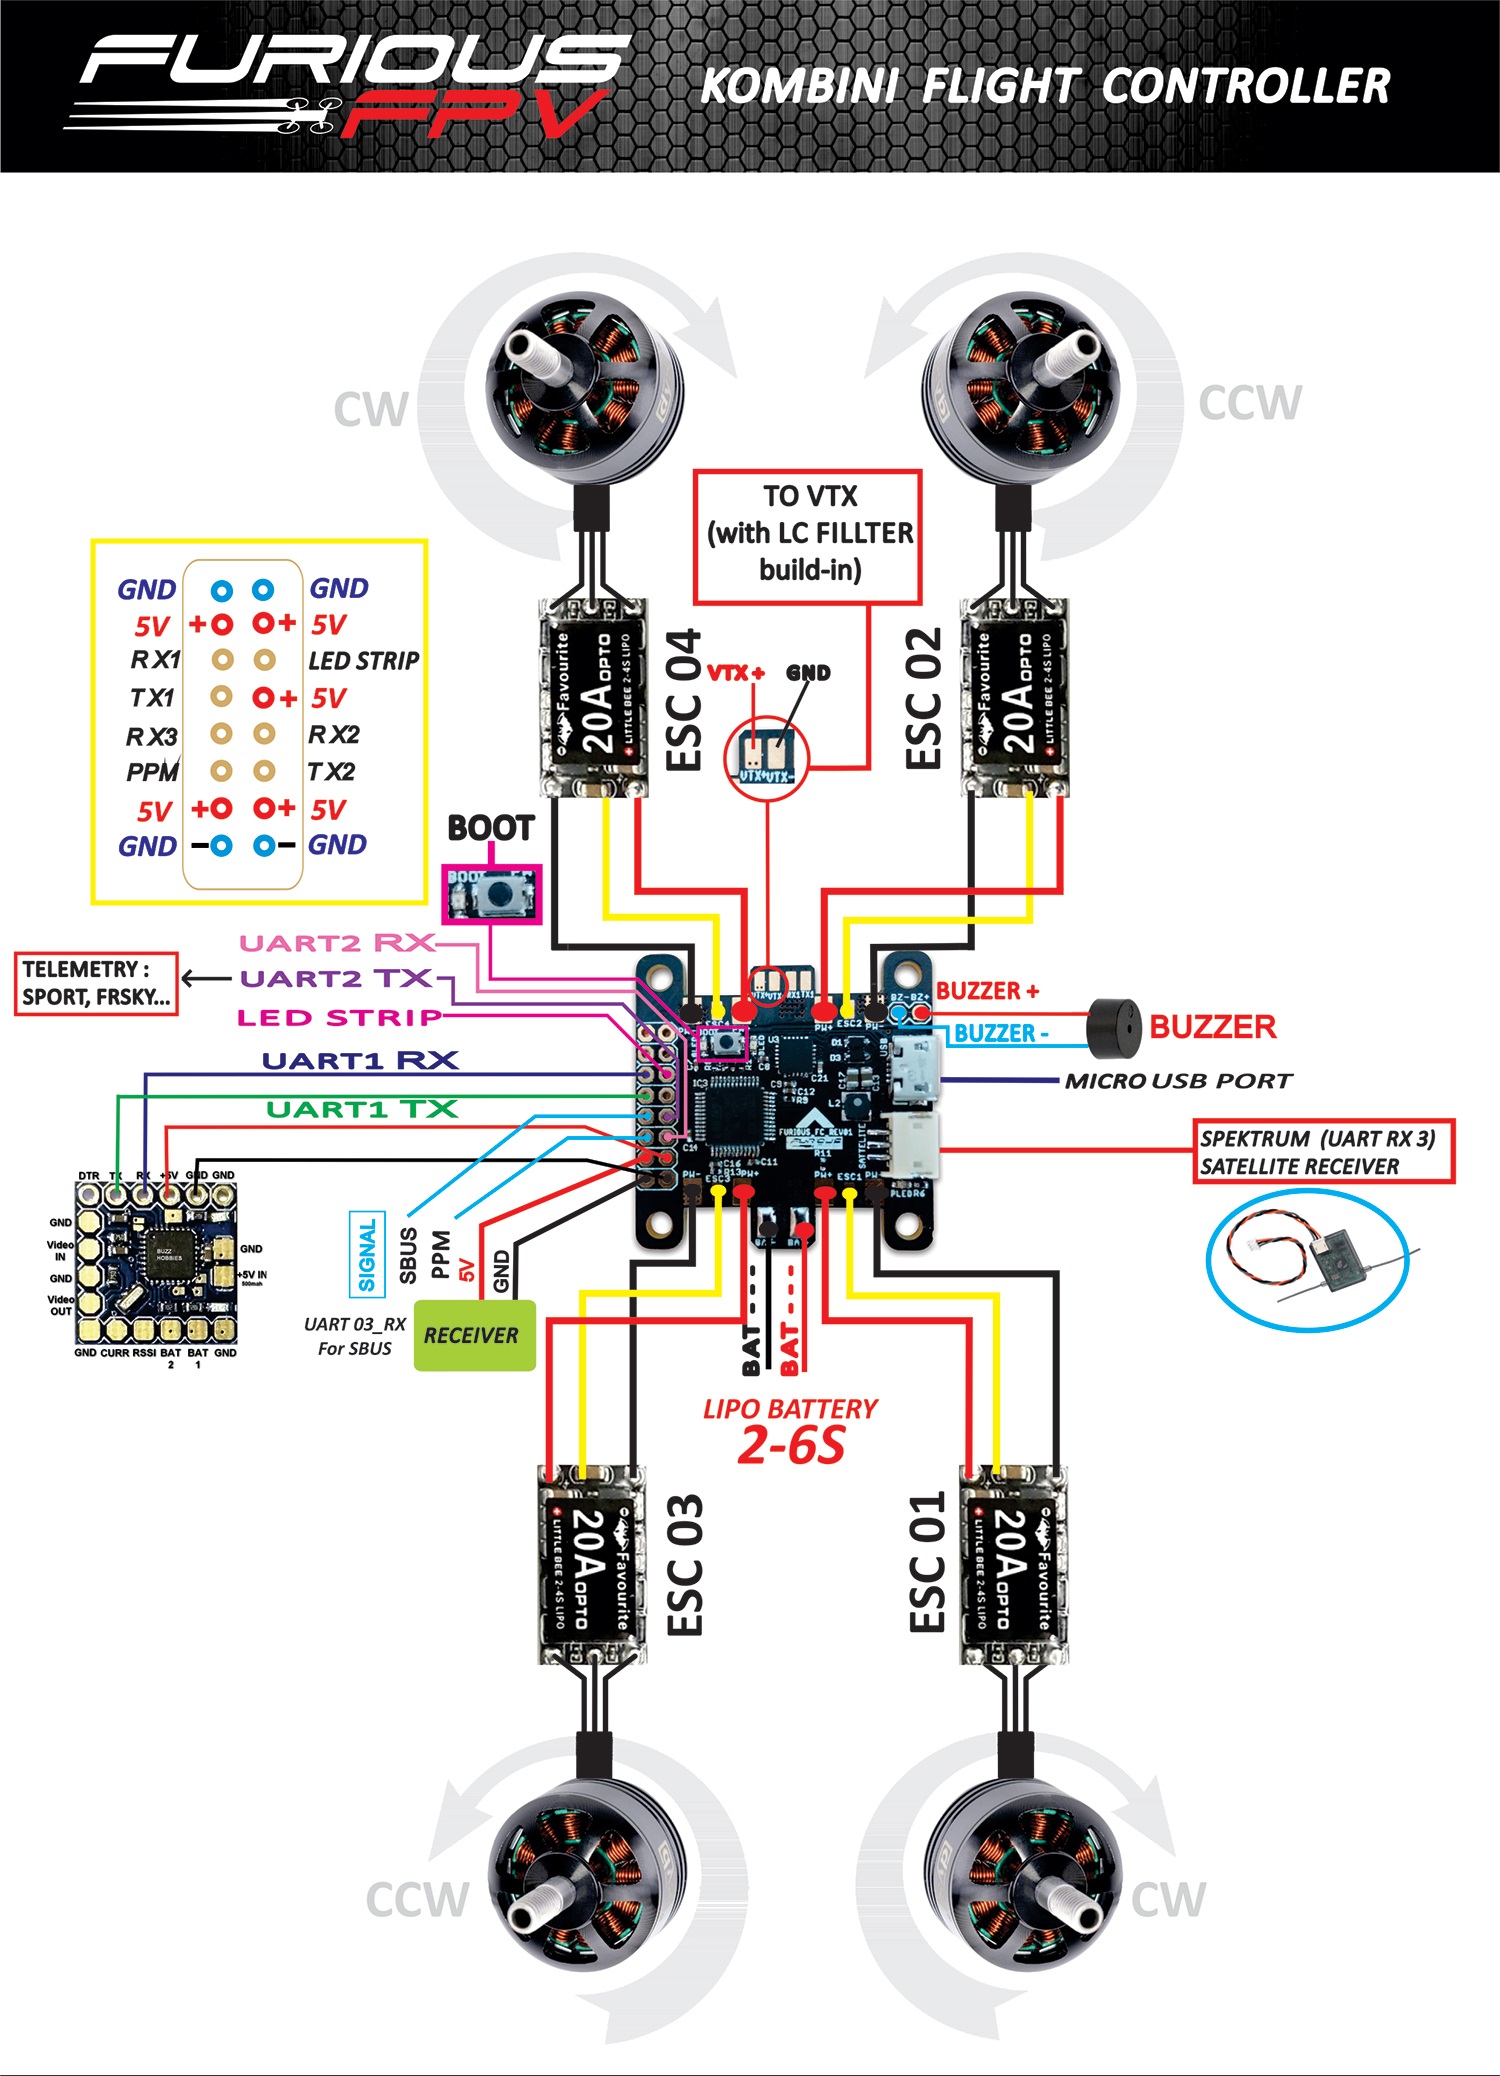 FuriousFPV Kombini Flight Controller Review – Phaser FPV x8r wiring diagram 